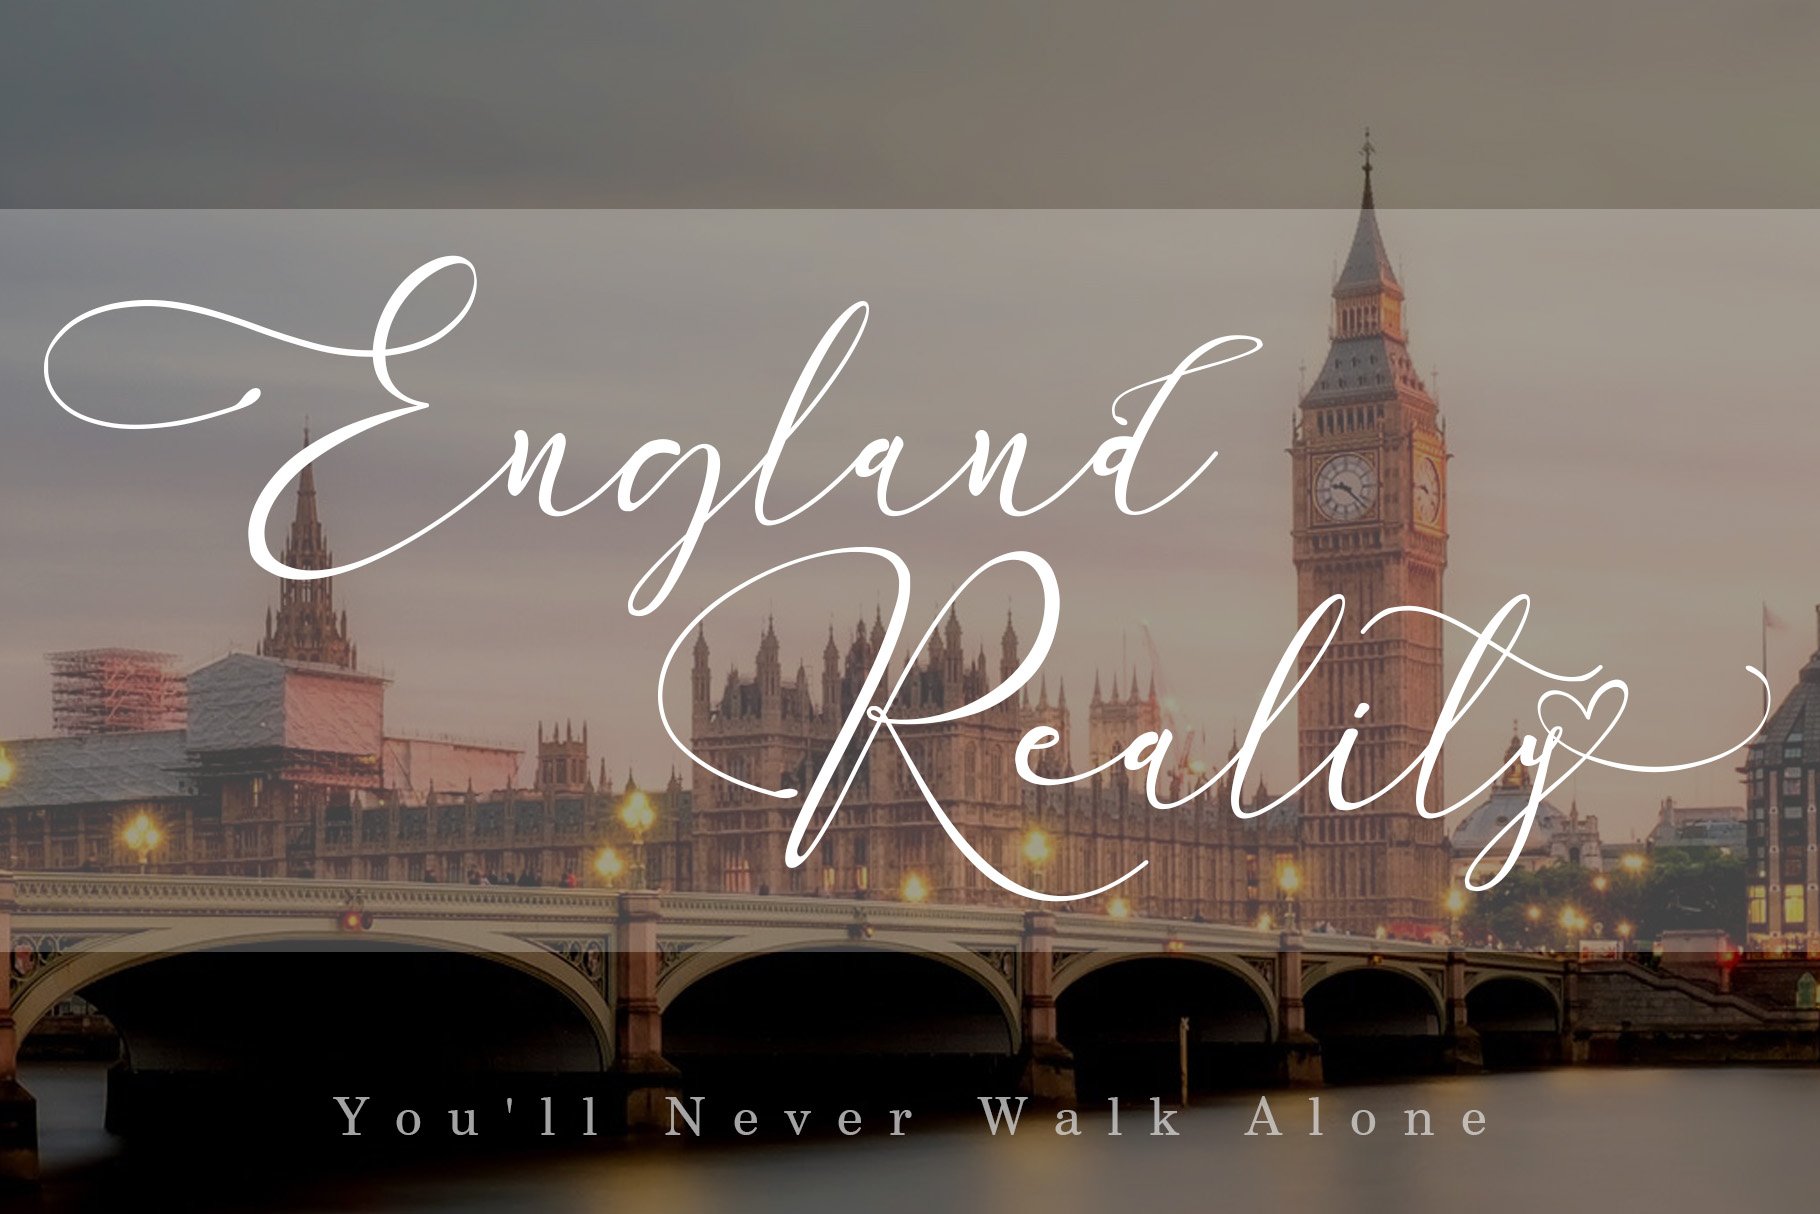 England Reality cover image.